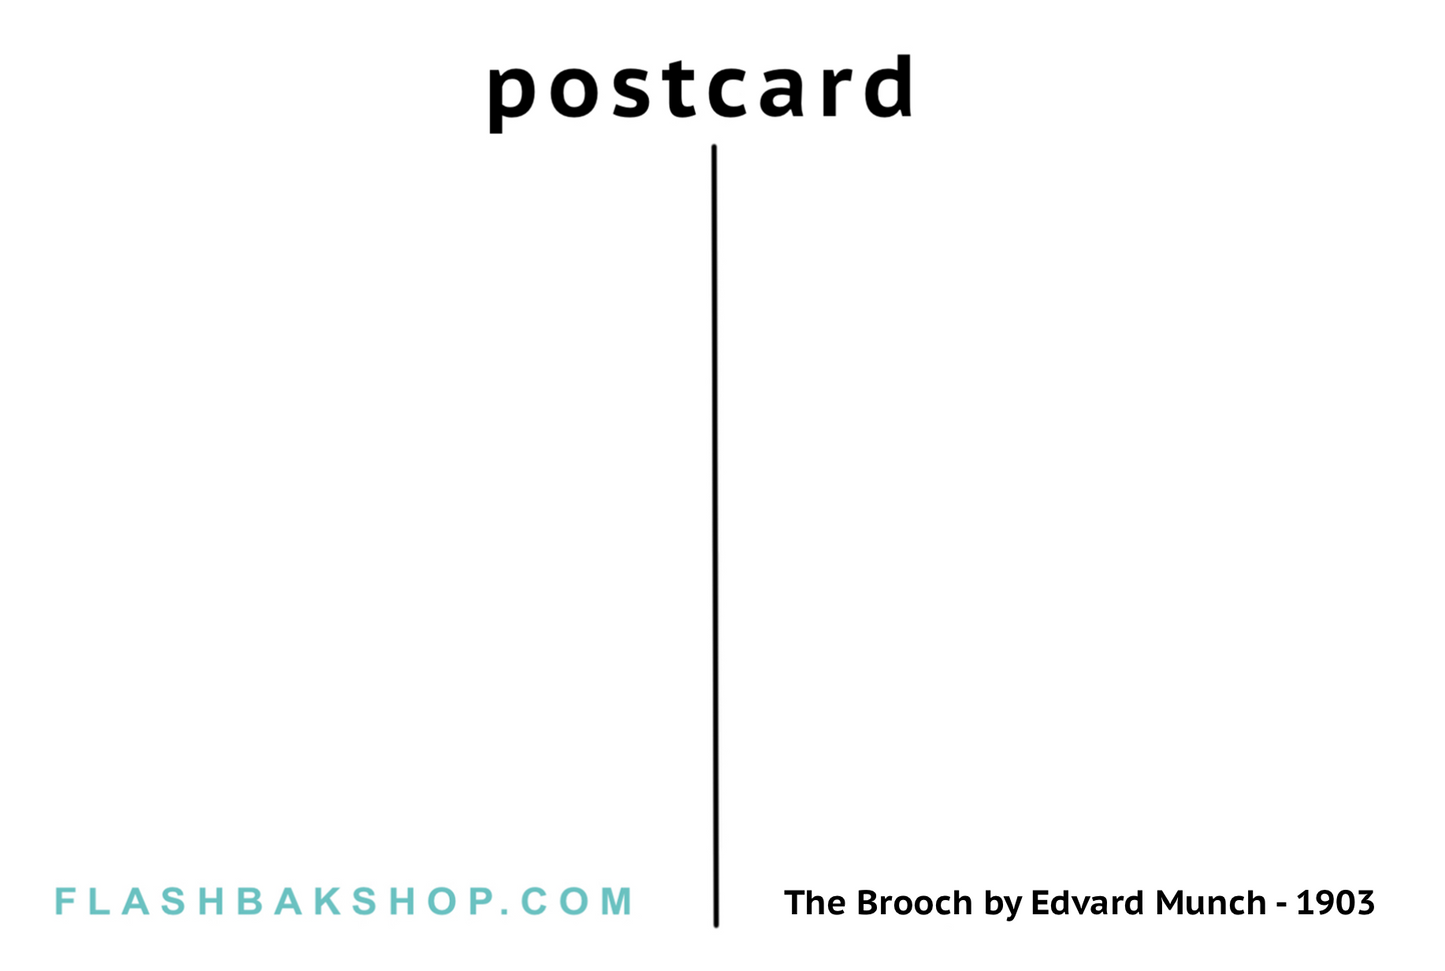 La Broche d'Edvard Munch, 1903 - Carte postale